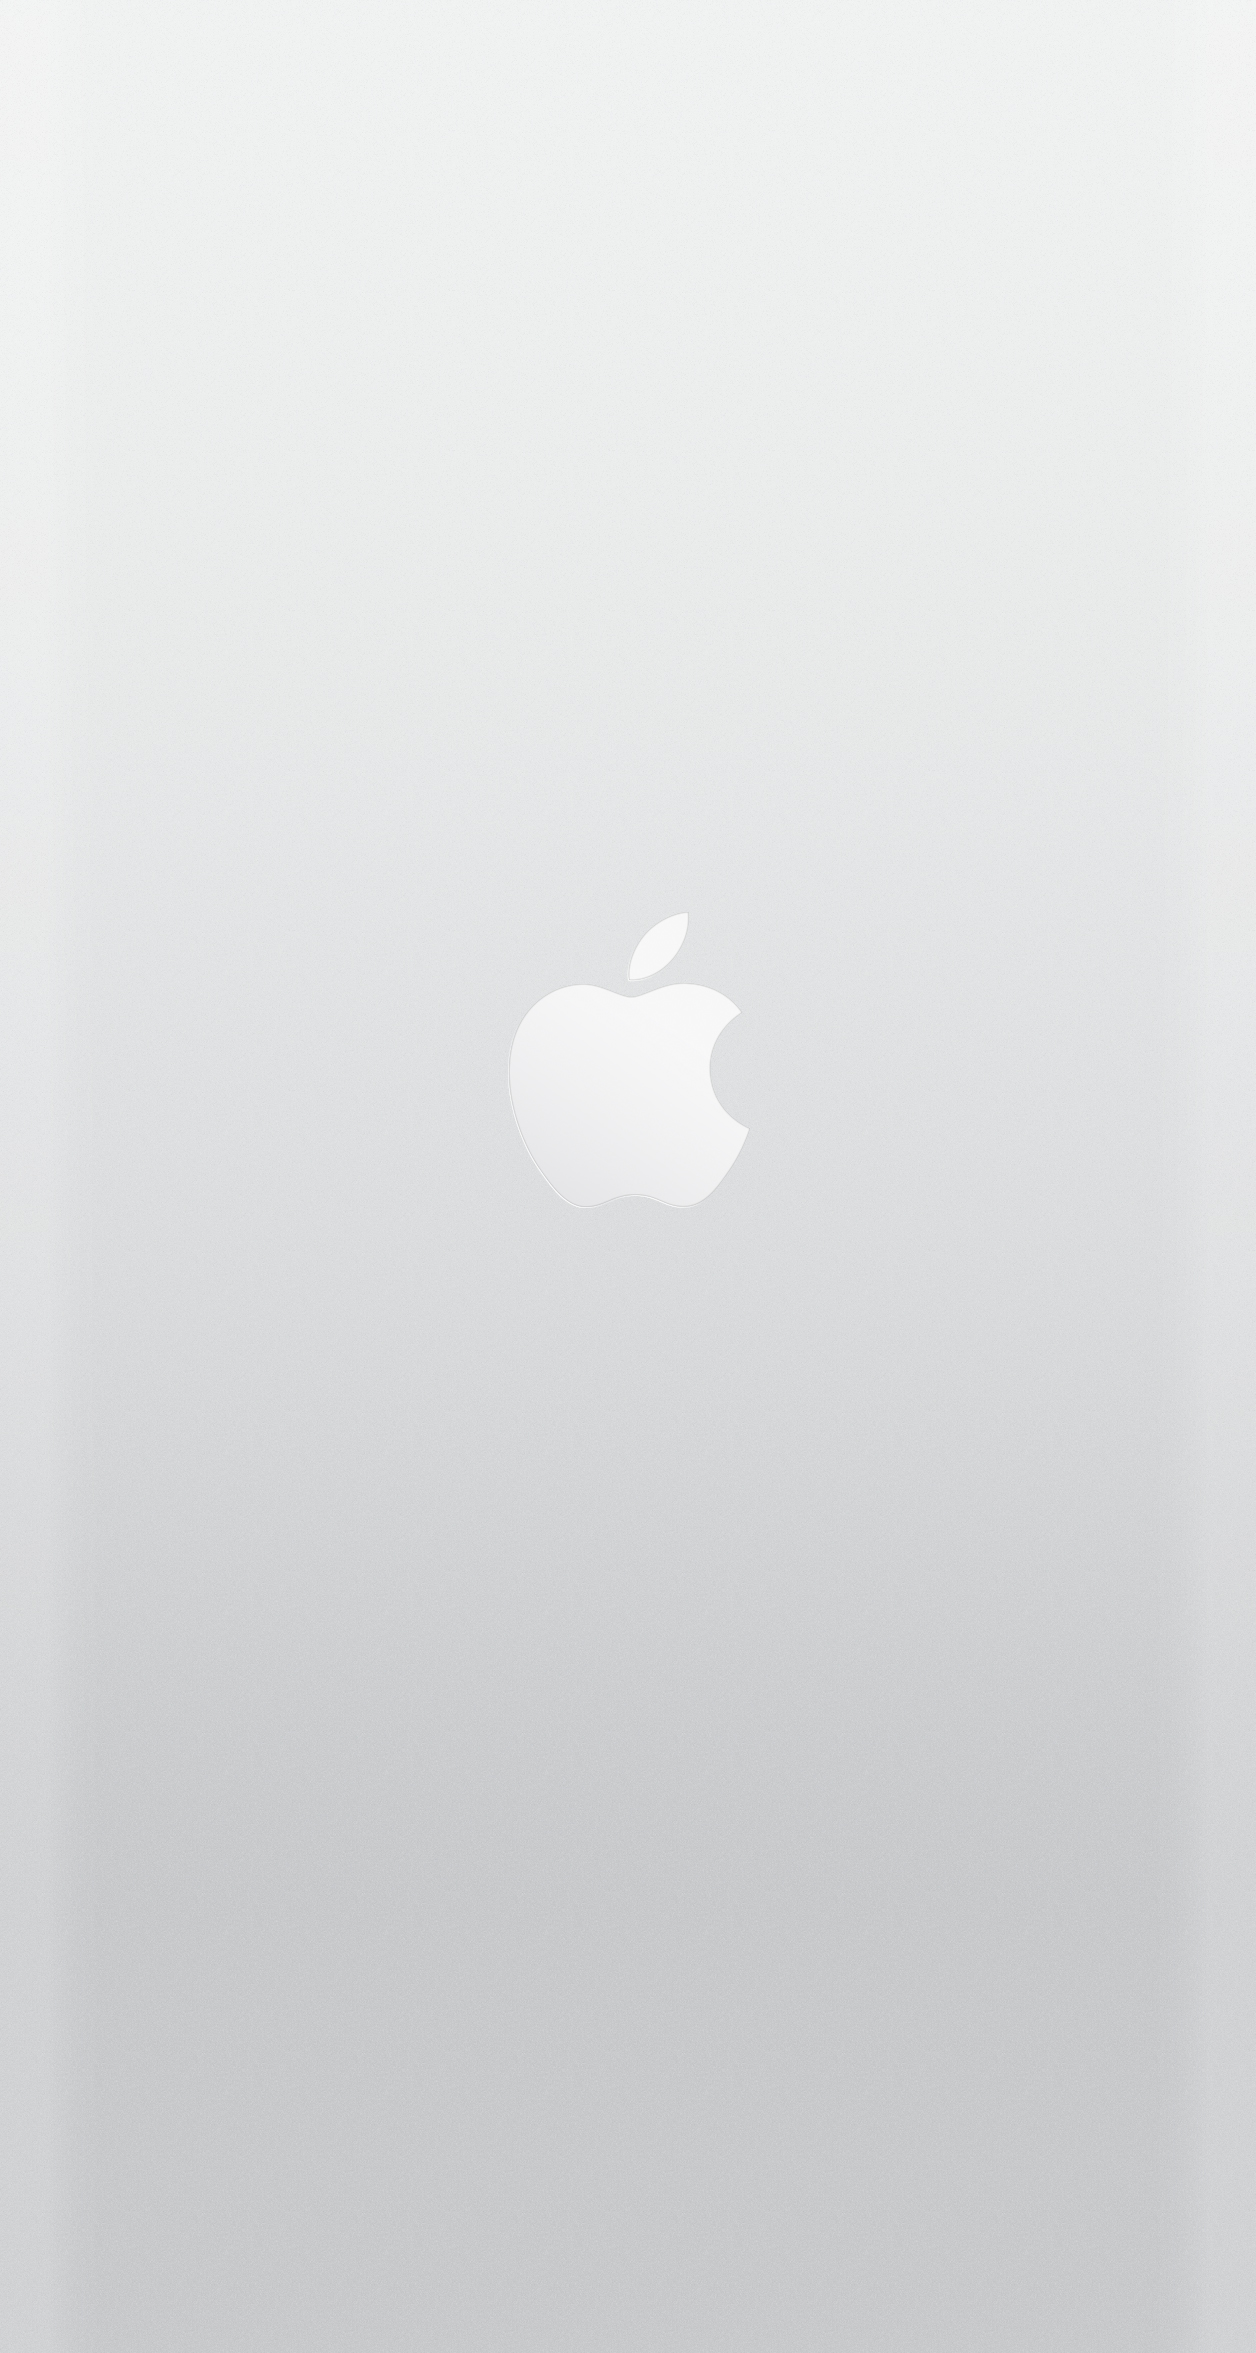 Apple logo wallpaper for iPhone 6